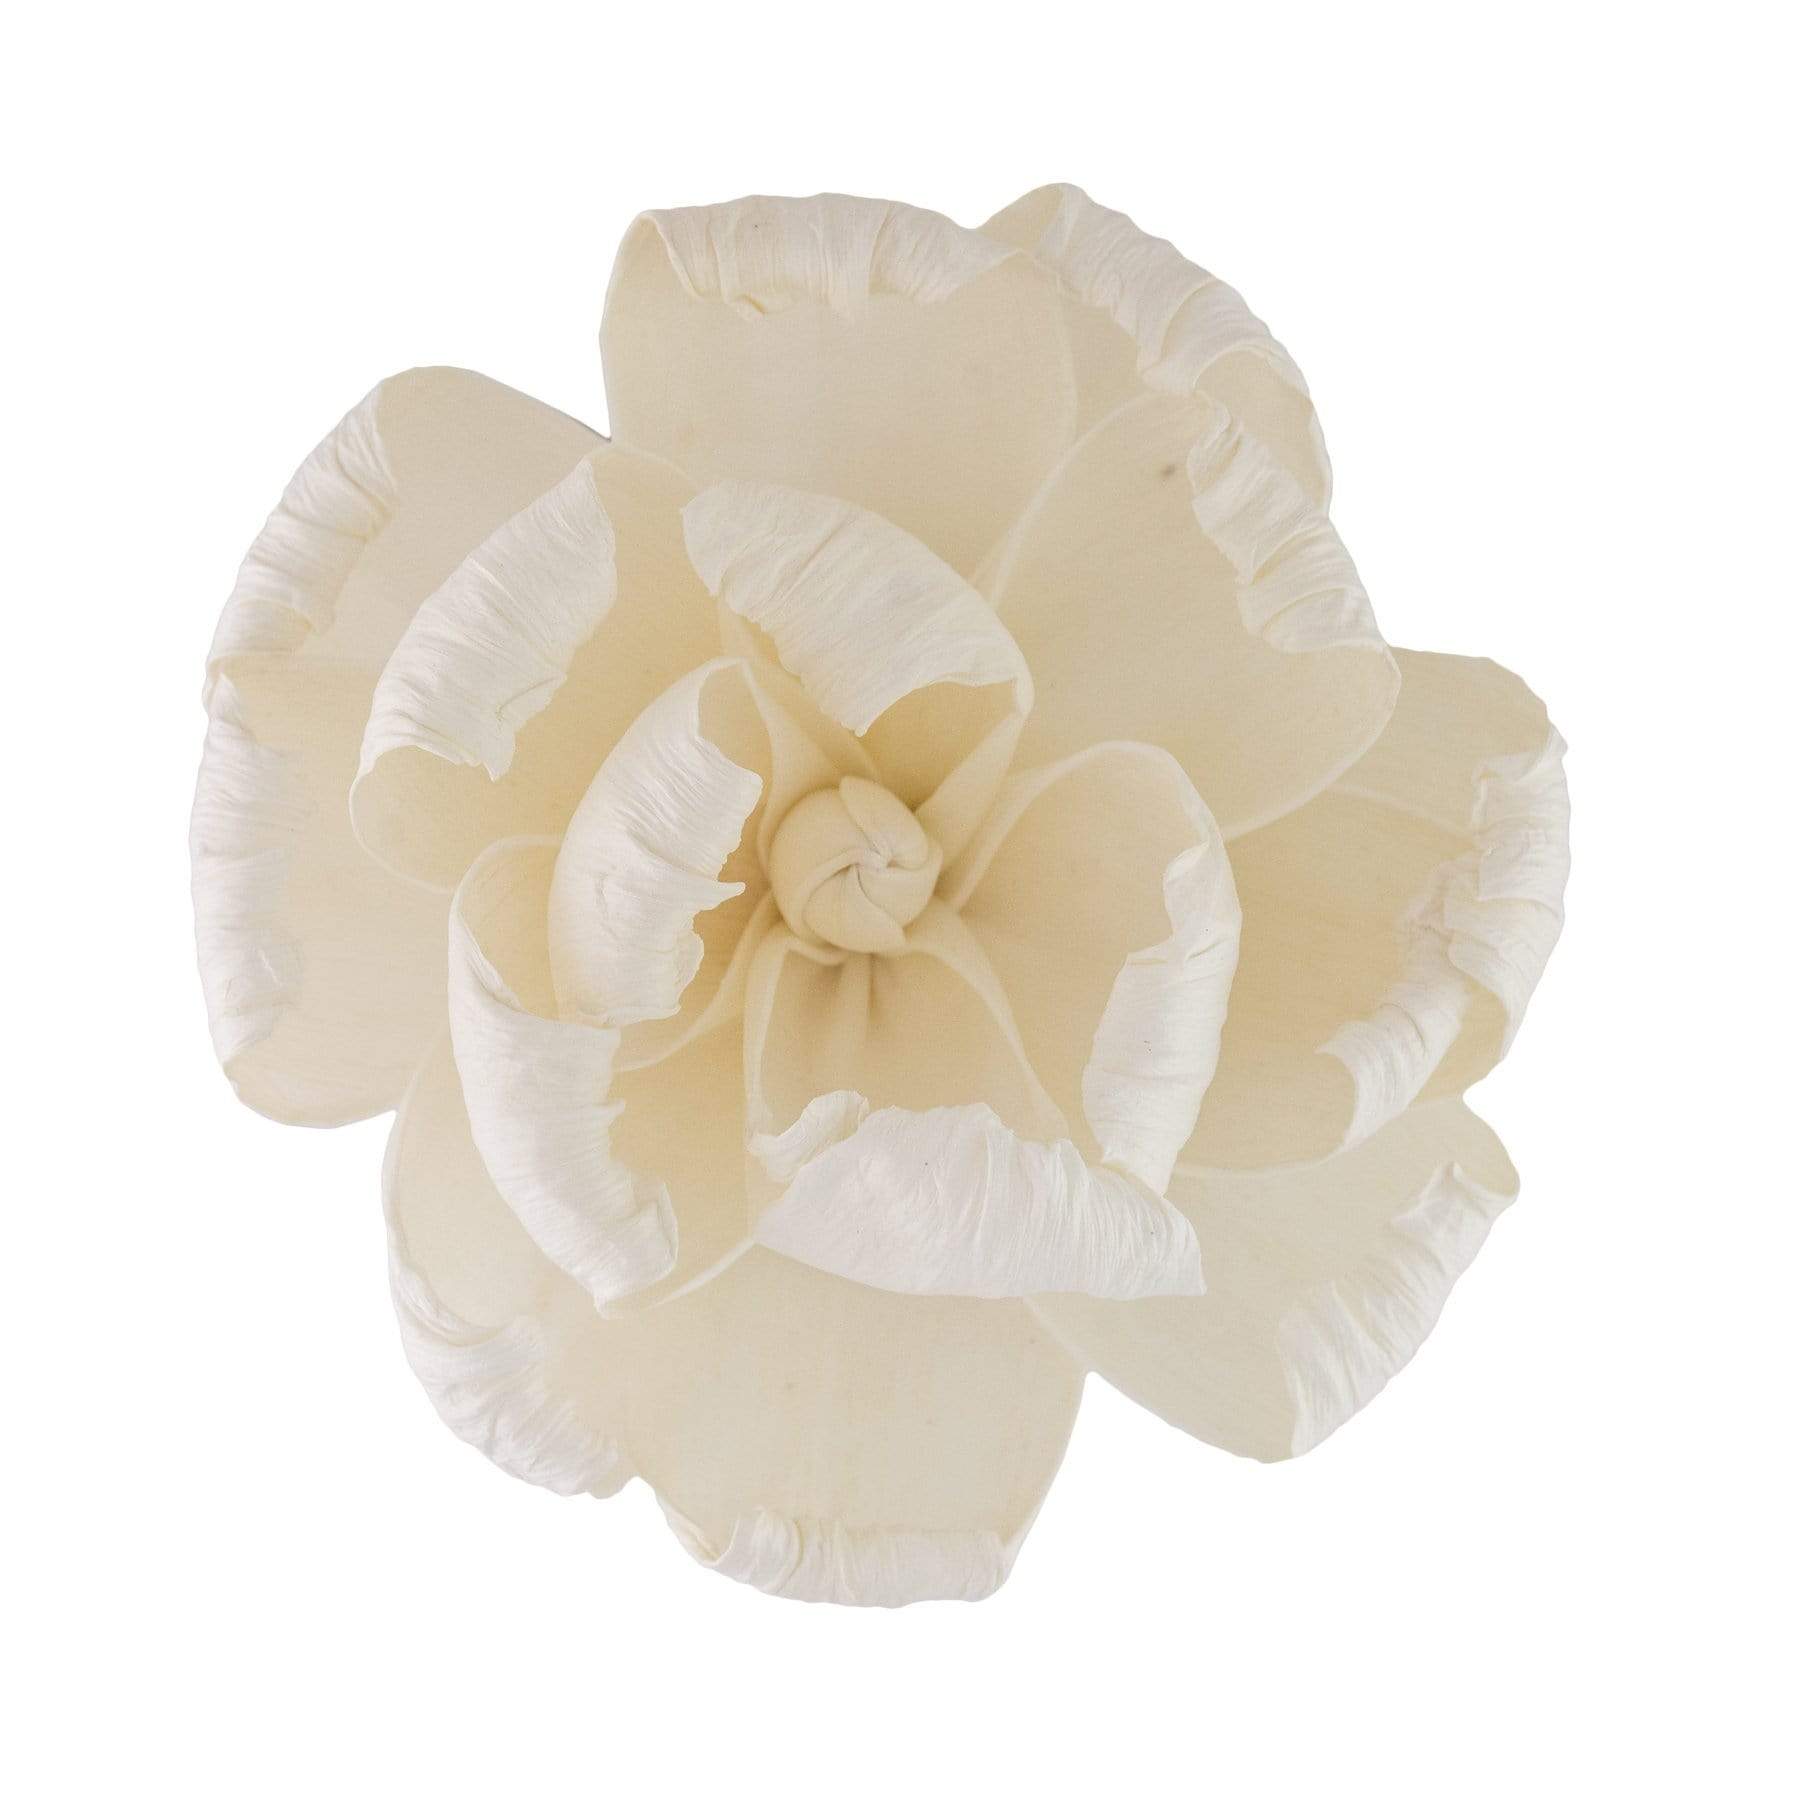 HYSSES Home Scents 5" Solar Flower Diffuser Refill - Magnolia